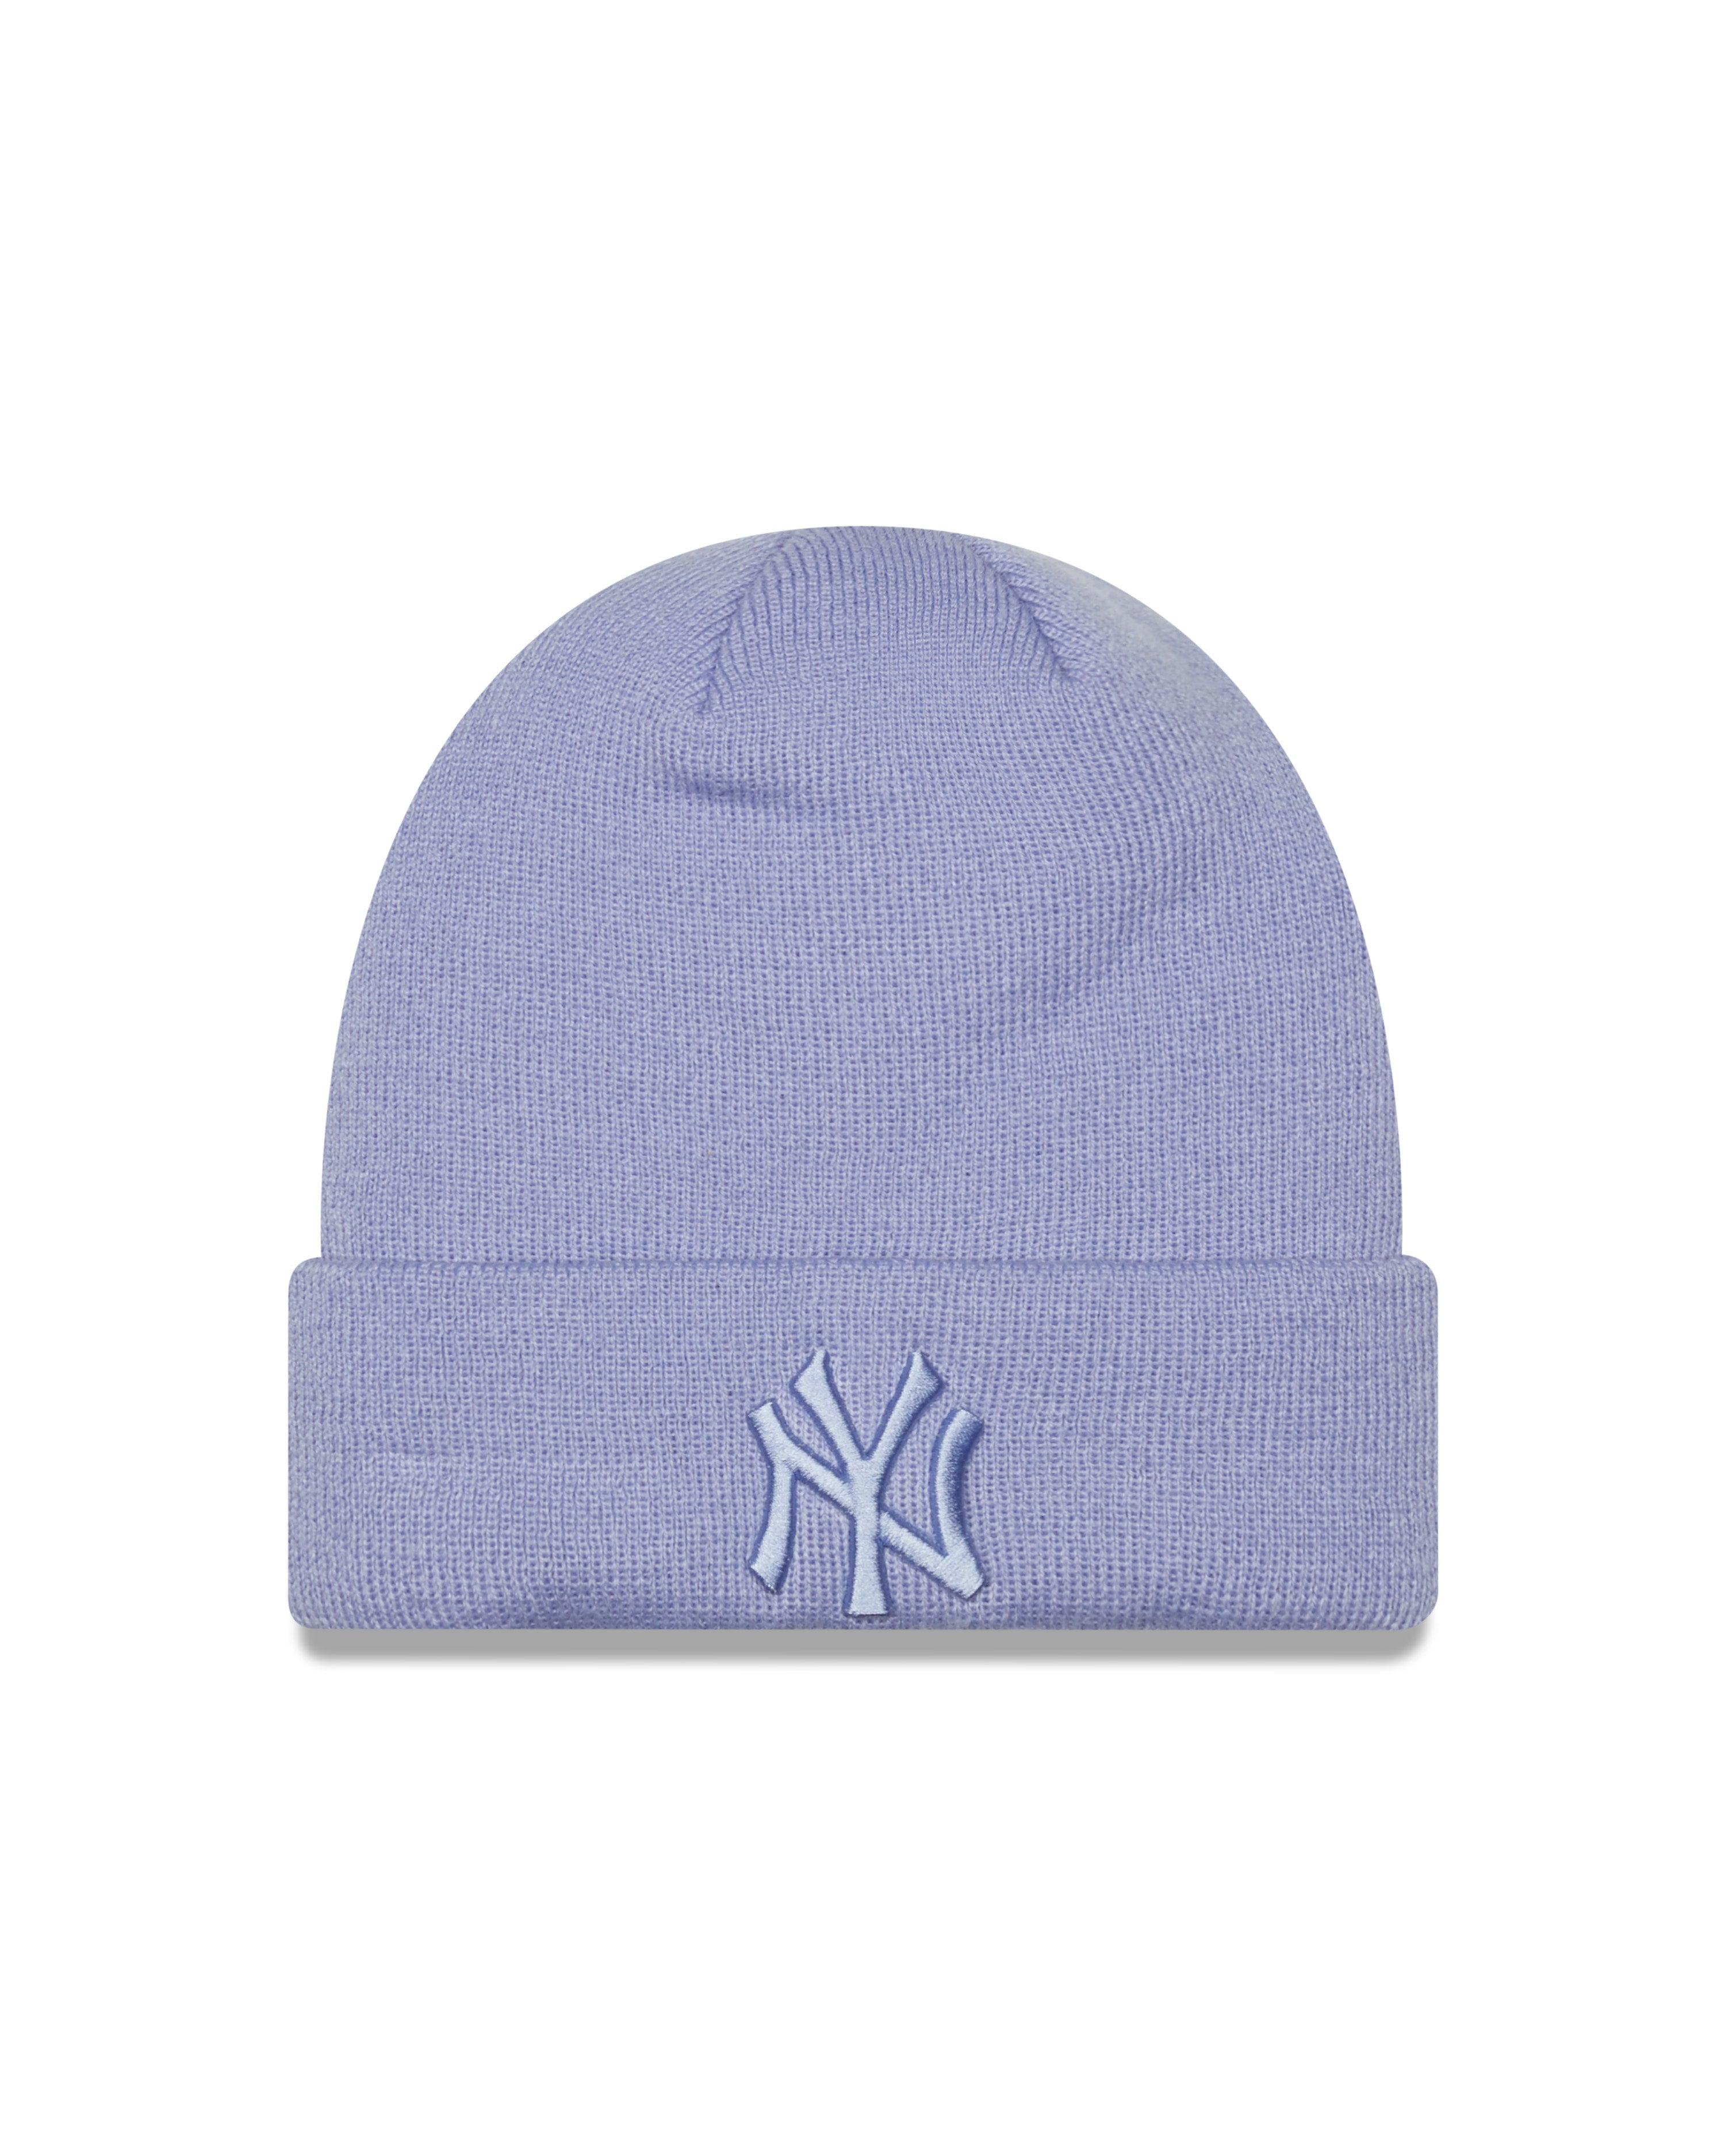 WMNS League Essentials Beanie New York Yankees - Lavendel/Lavendel - Headz Up 